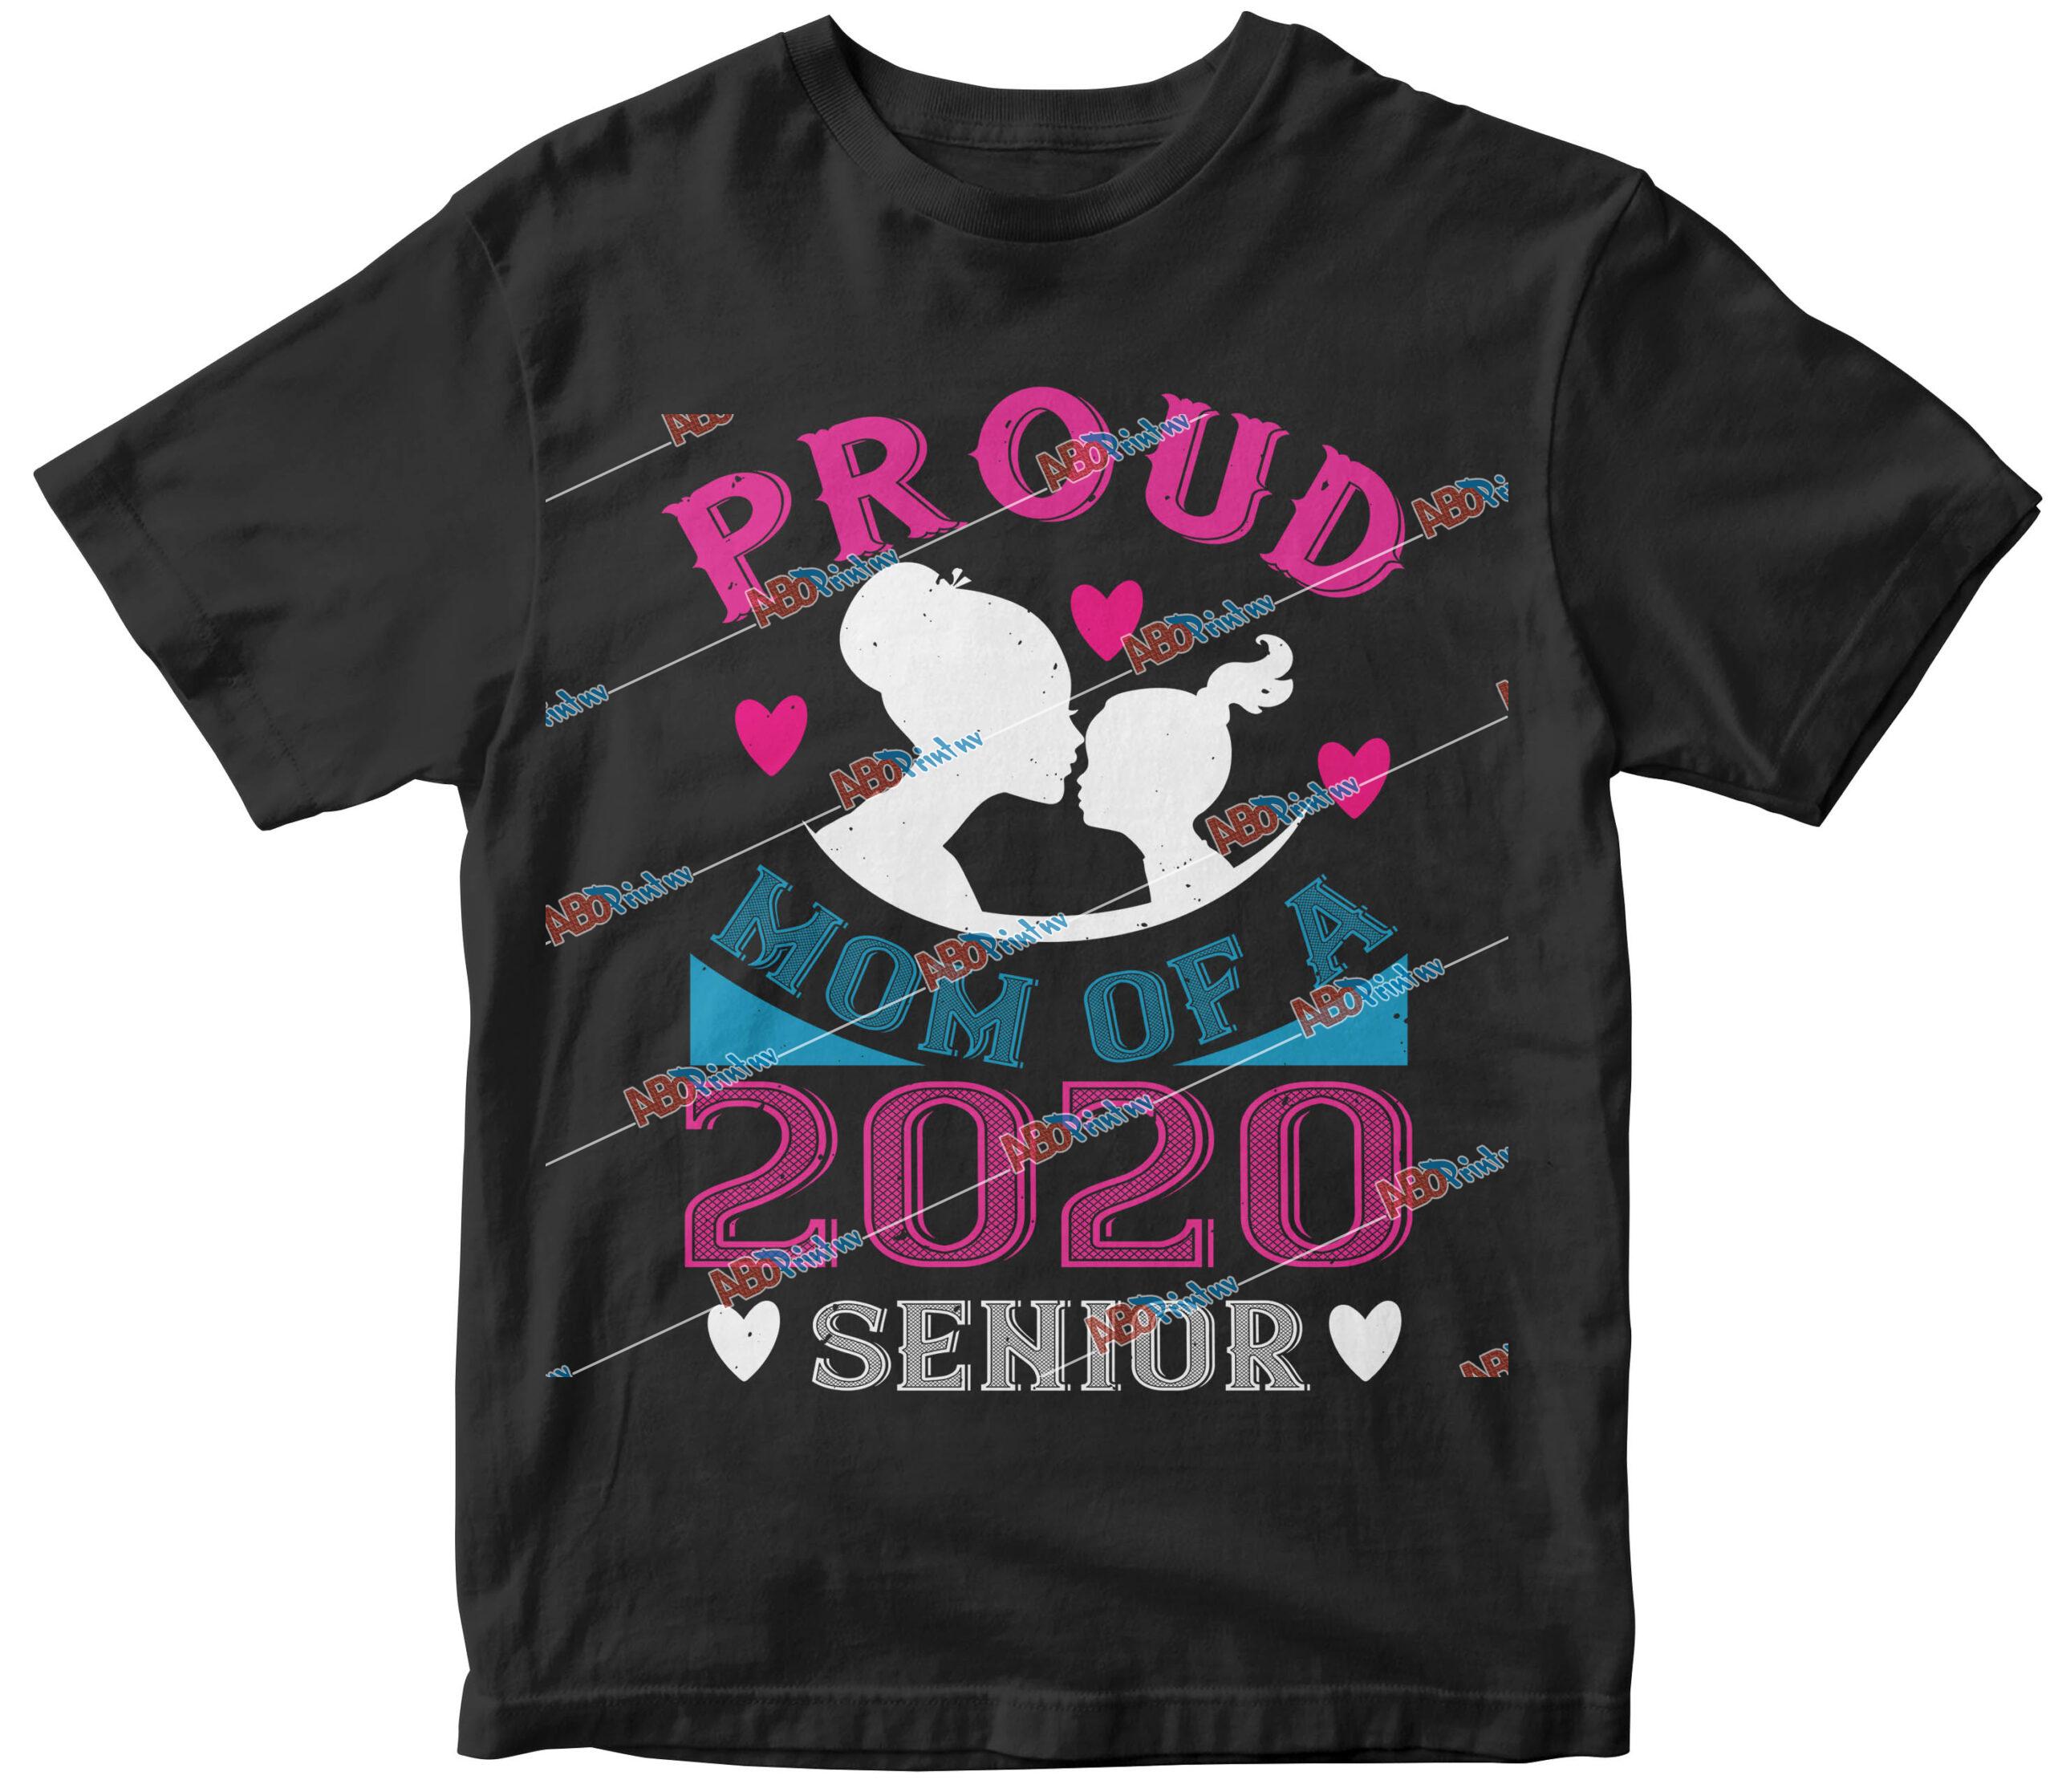 proud of a mom 2020 senior.jpg